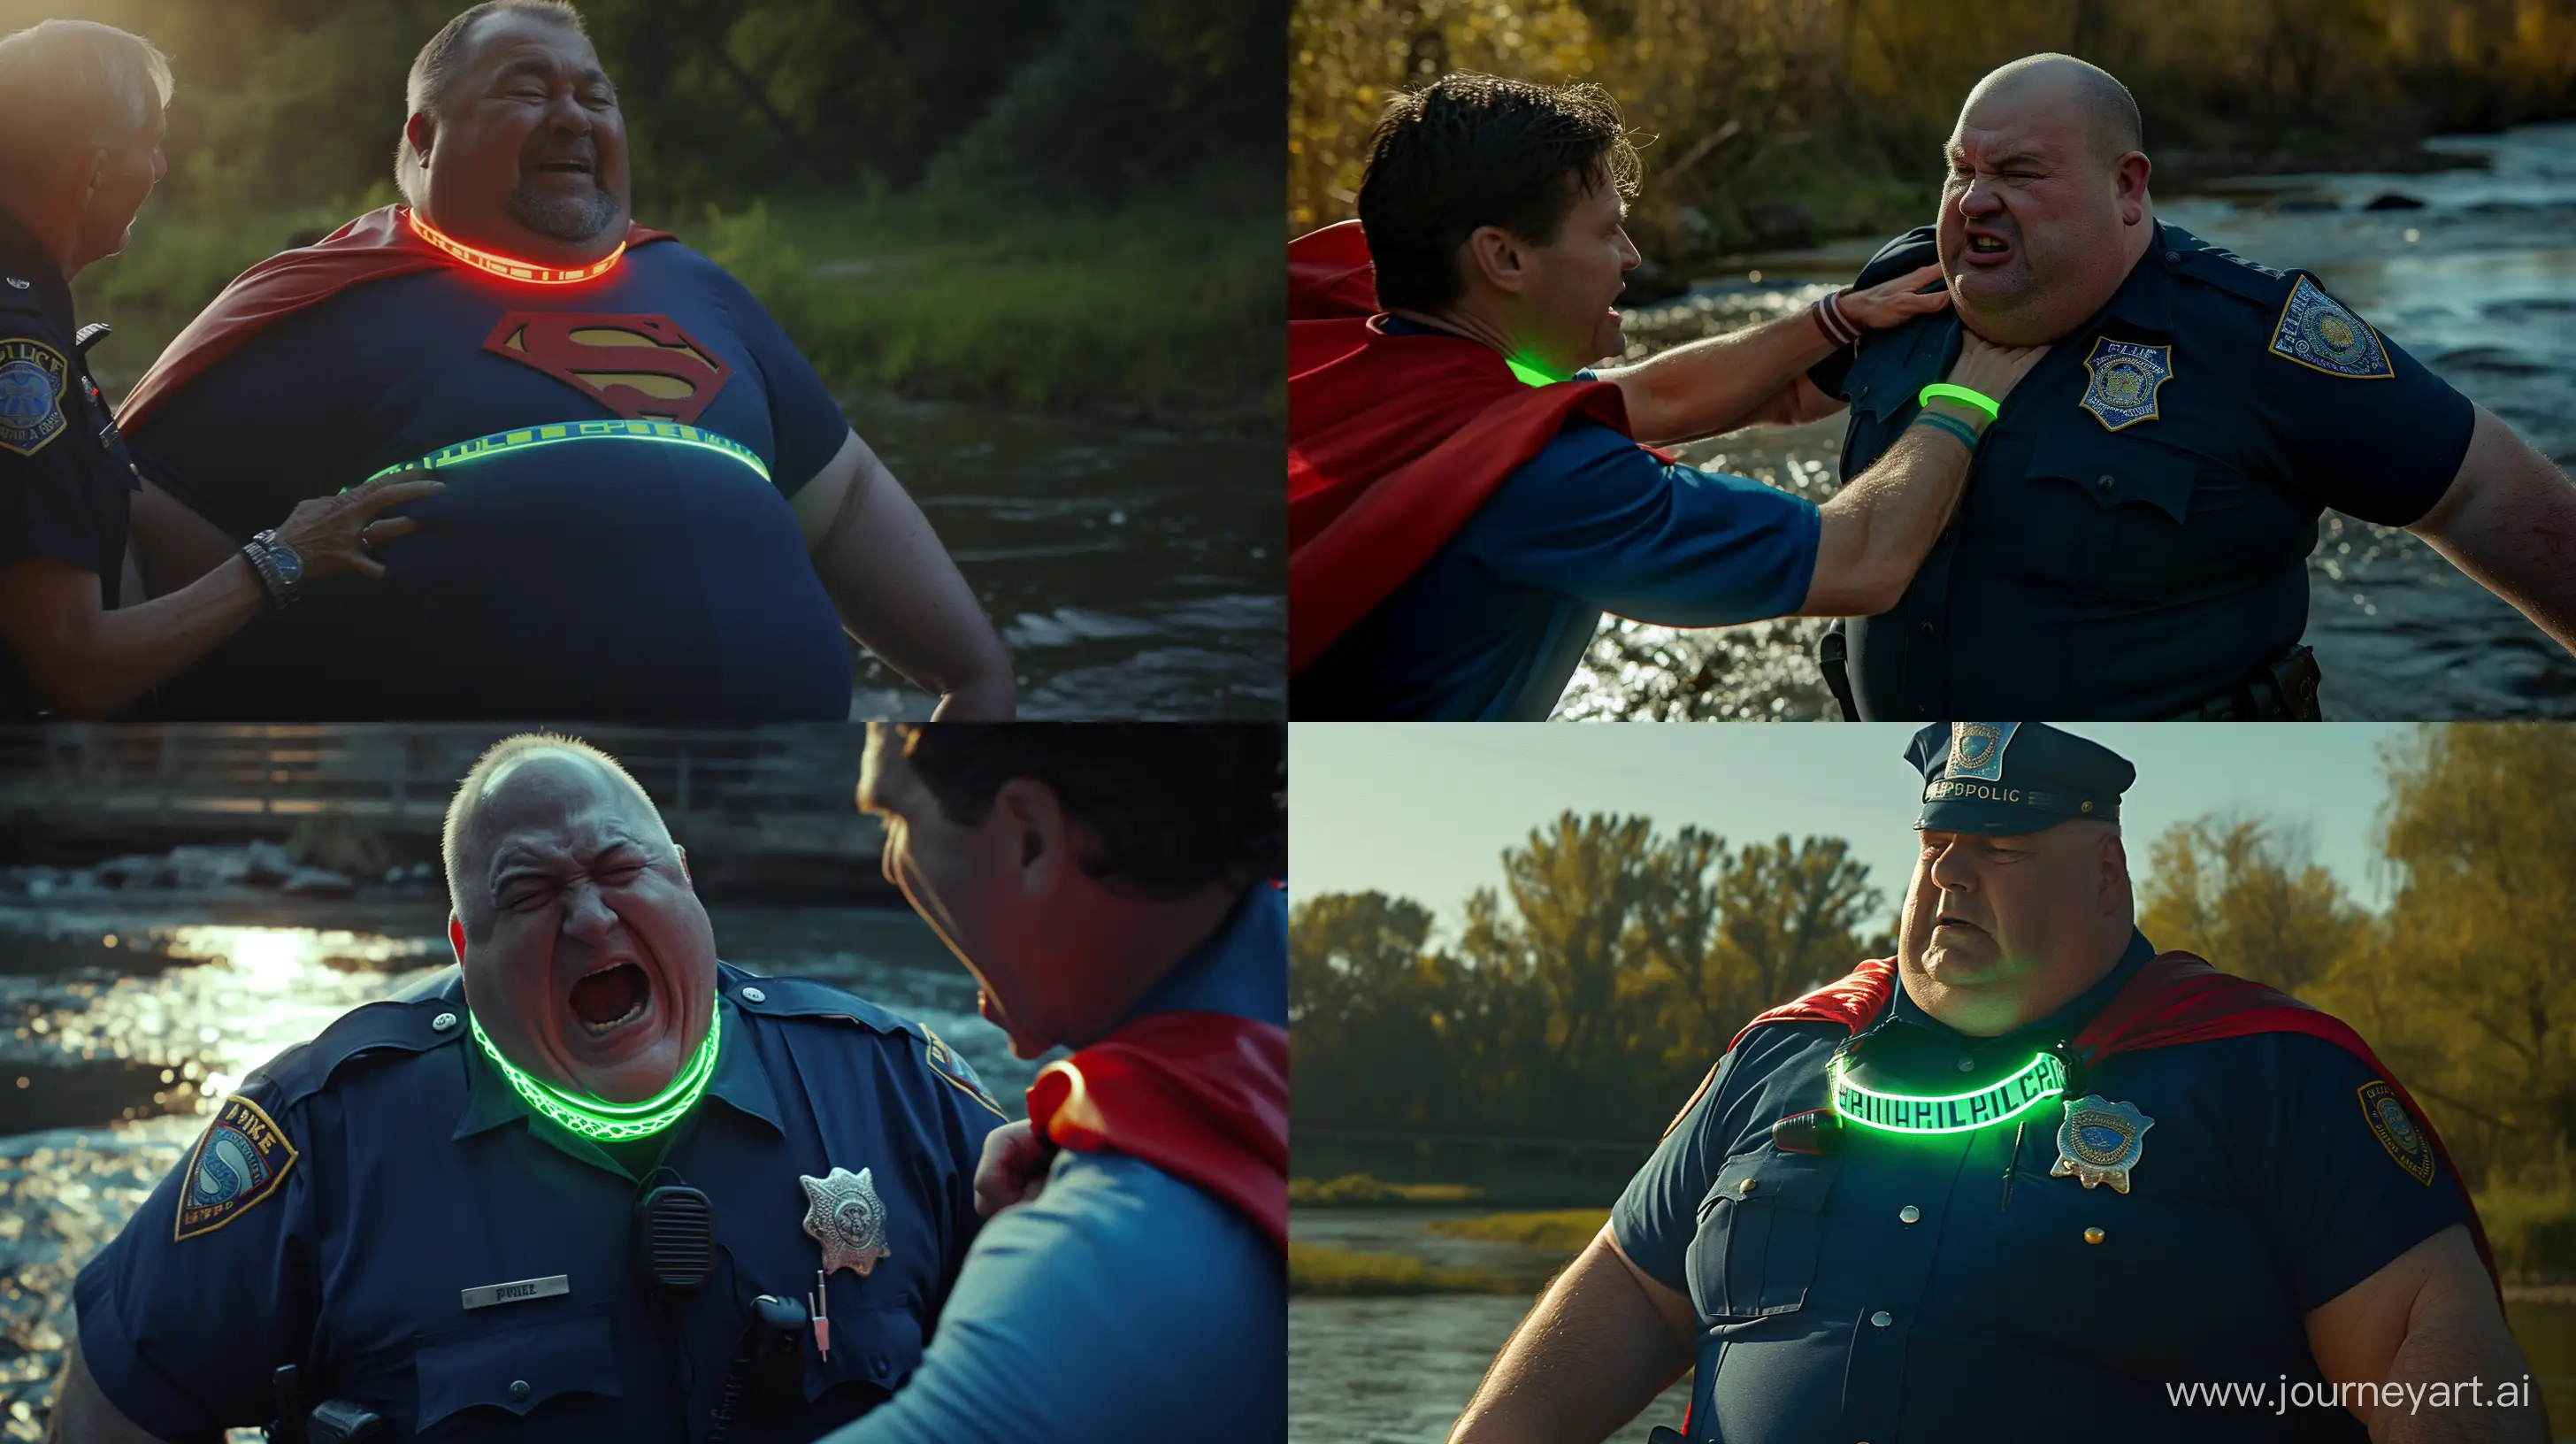 Dynamic-Showdown-Vintage-Policeman-vs-Retro-Superman-in-Natural-Light-by-the-River